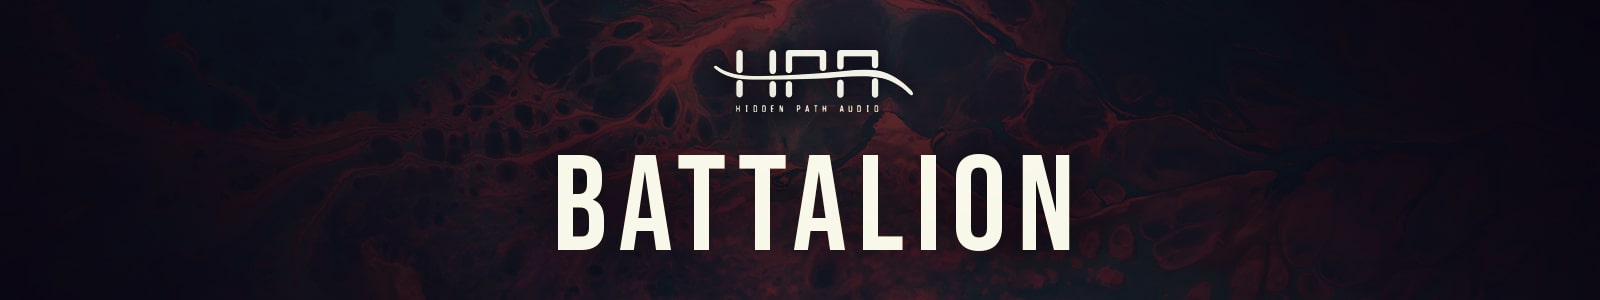 battalion by hidden path audio